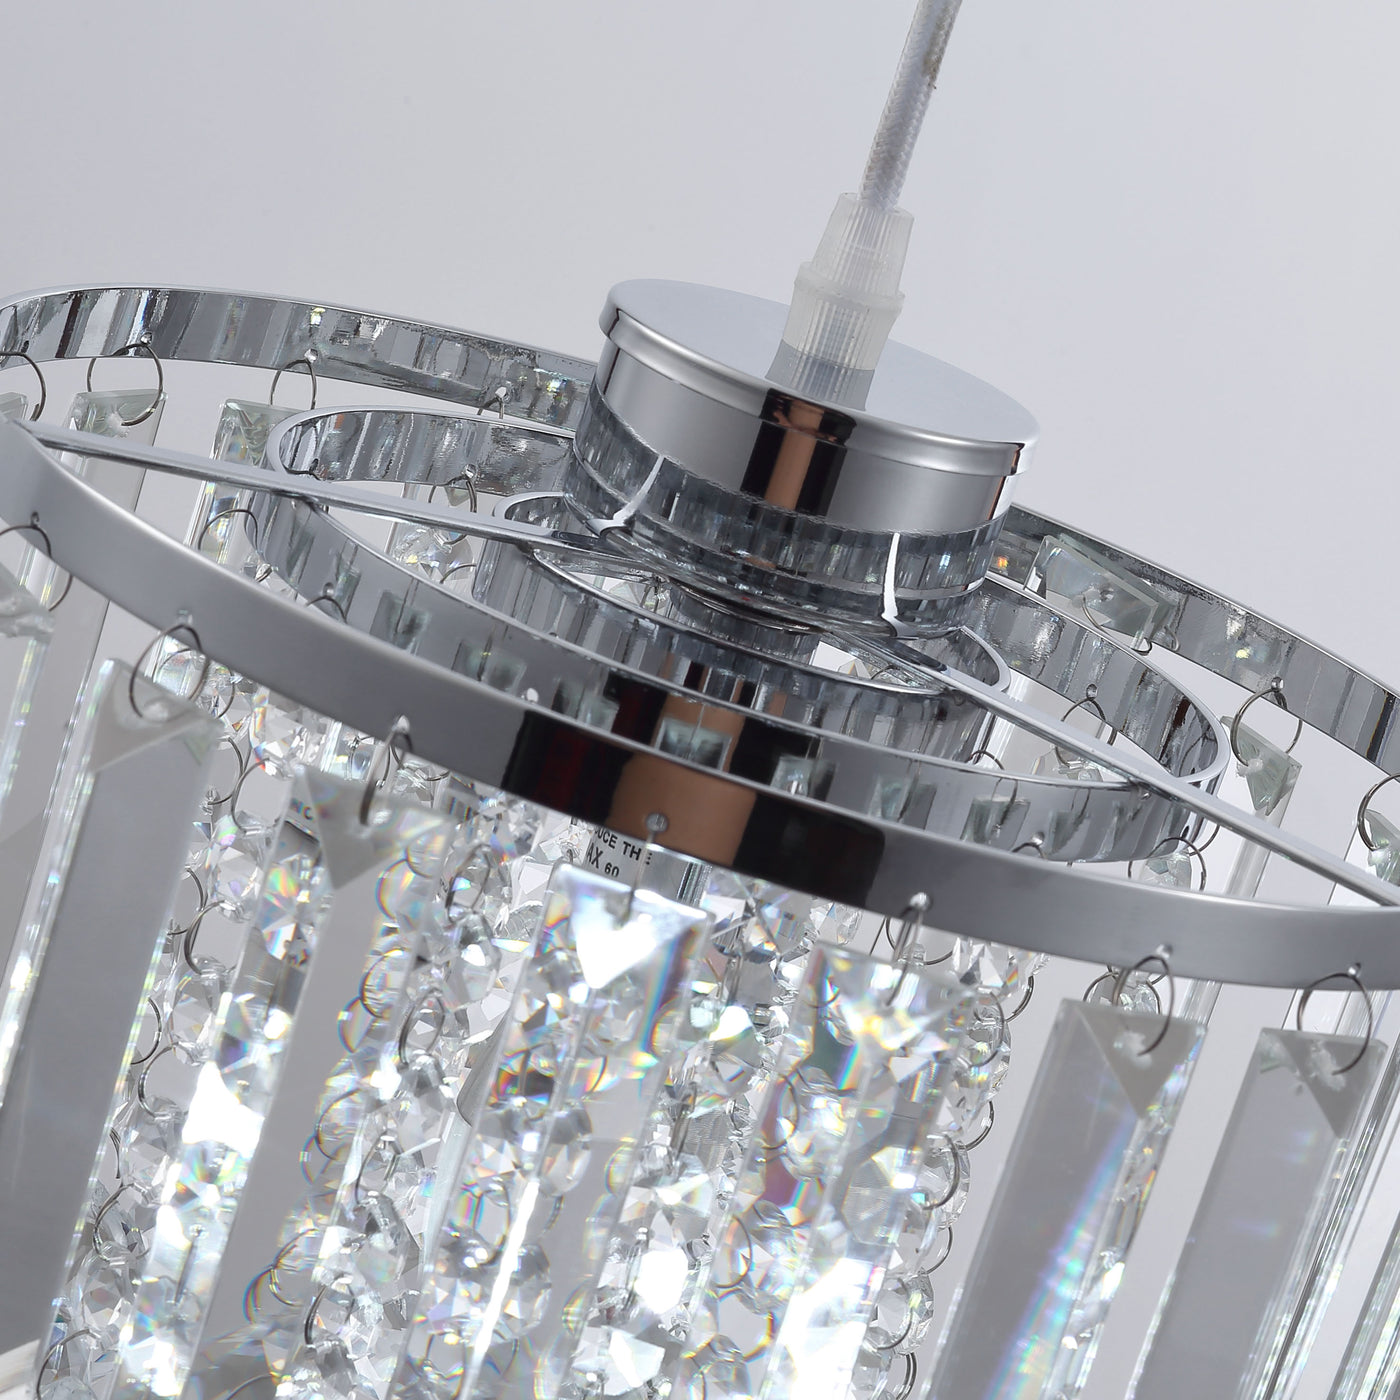 1-Light Luxury Crystal Beads Chandelier Pendant Lighting